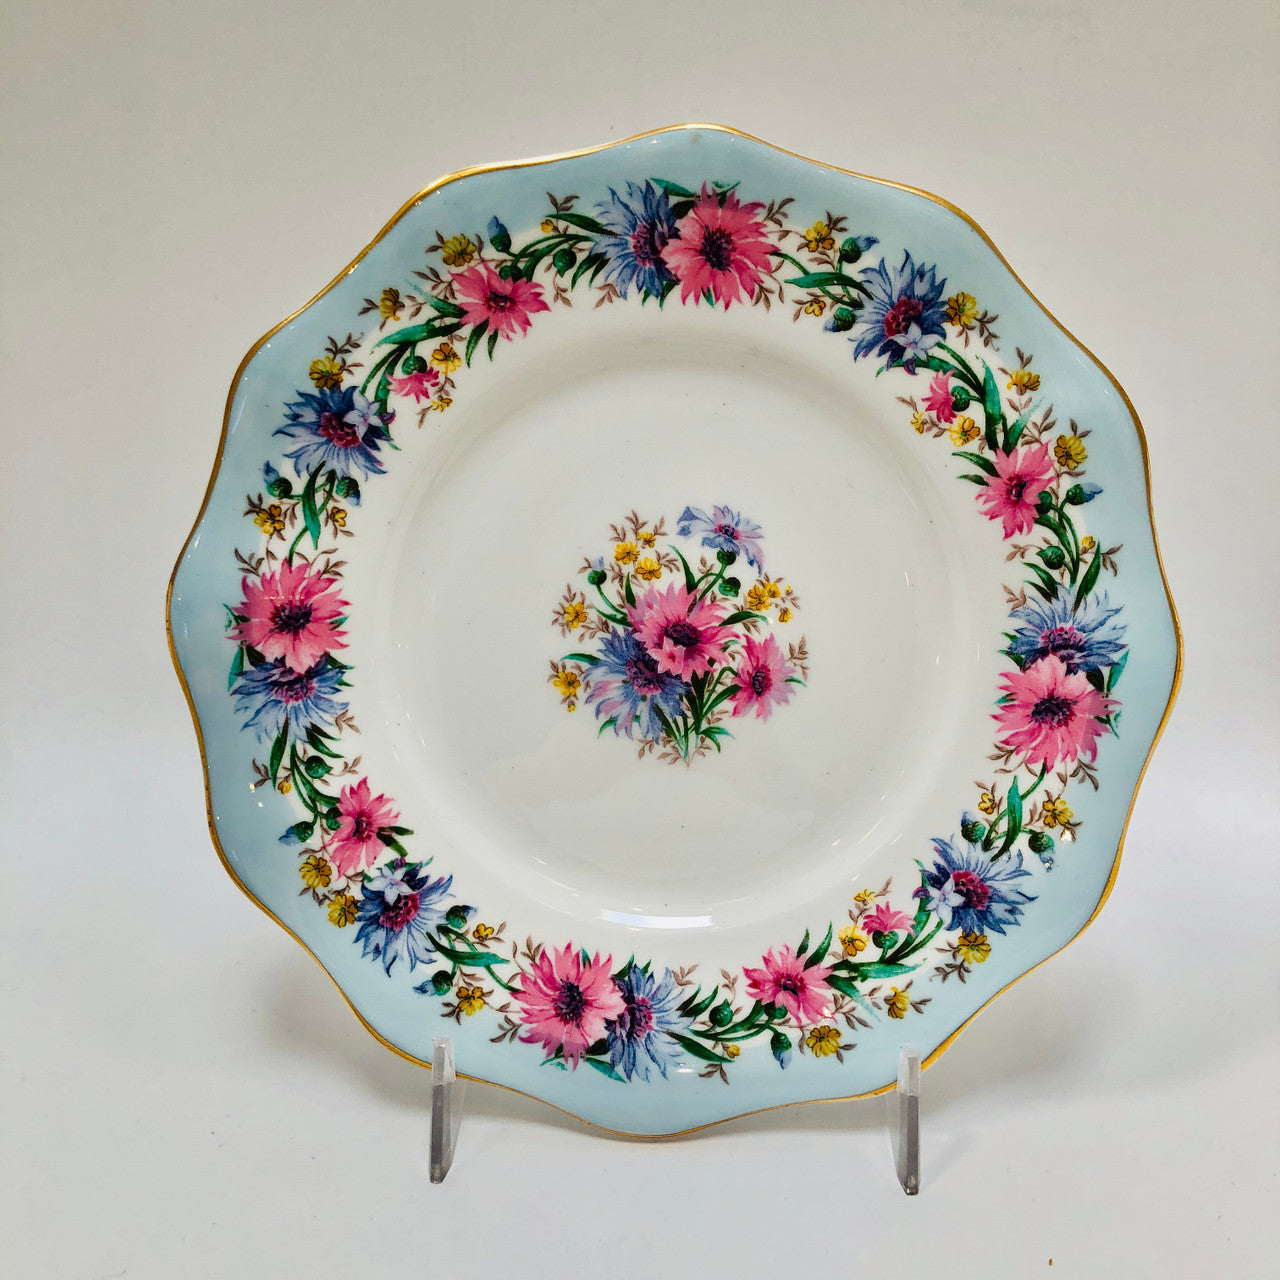 Foley, Cornflower, Blue, Vintage, Plate, Dessert, Fine Bone China, Ceramic.